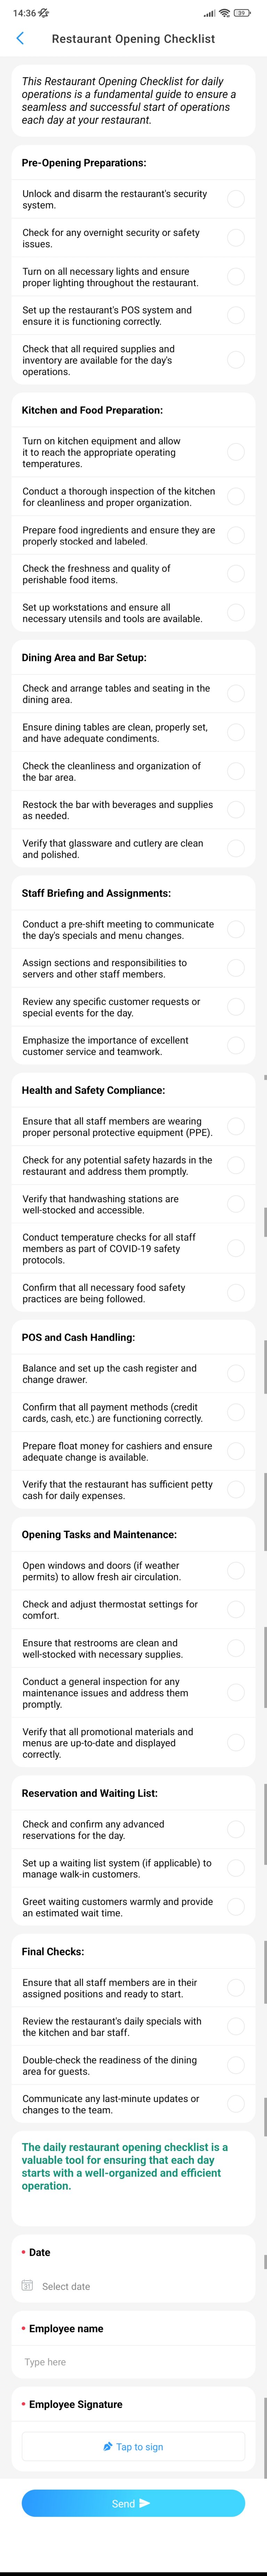 Restaurant Opening Checklist screenshot